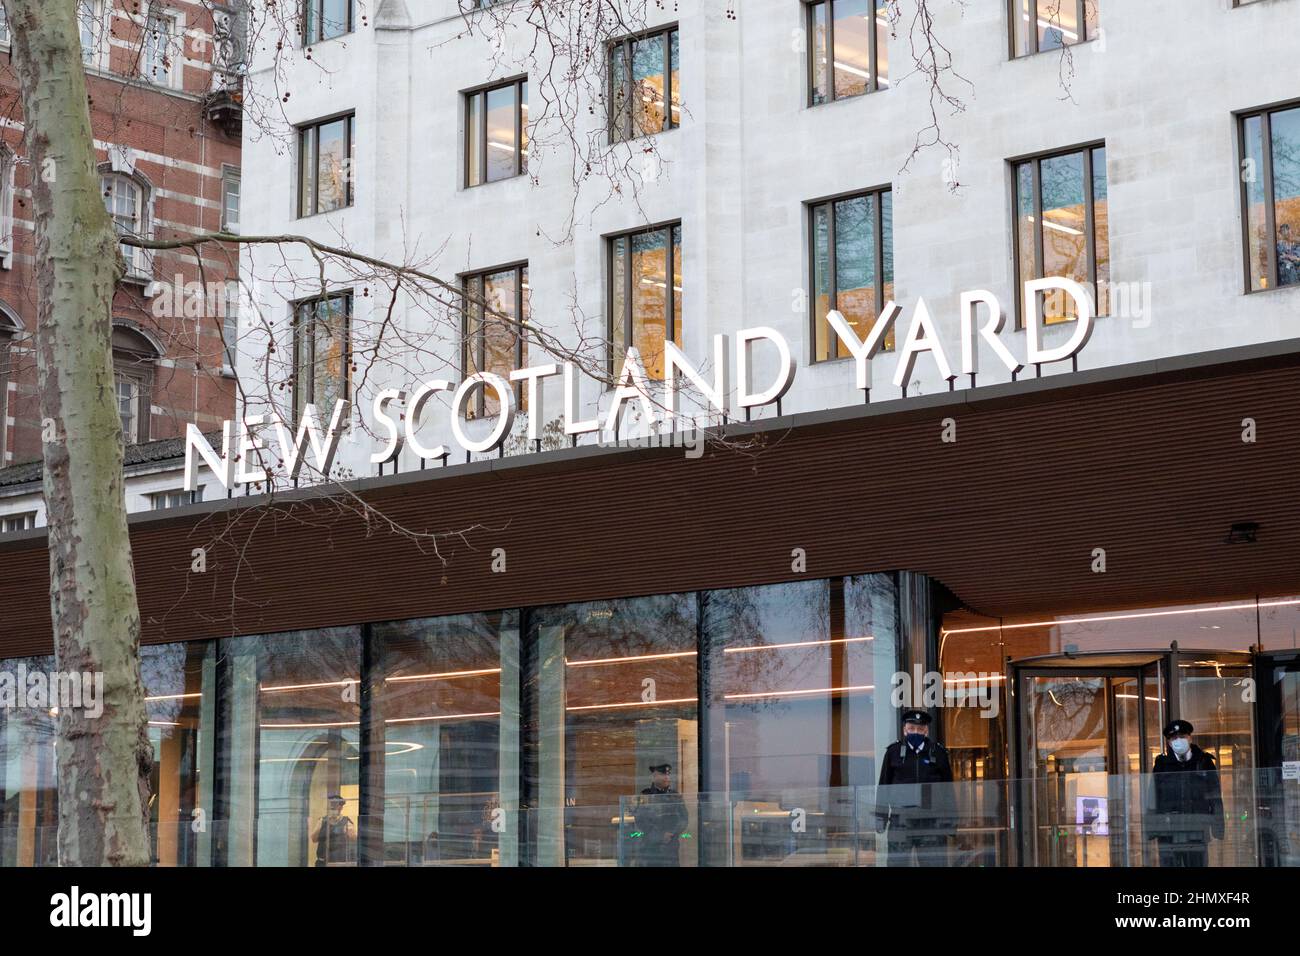 New Scotland Yard police headquarters. Stock Photo